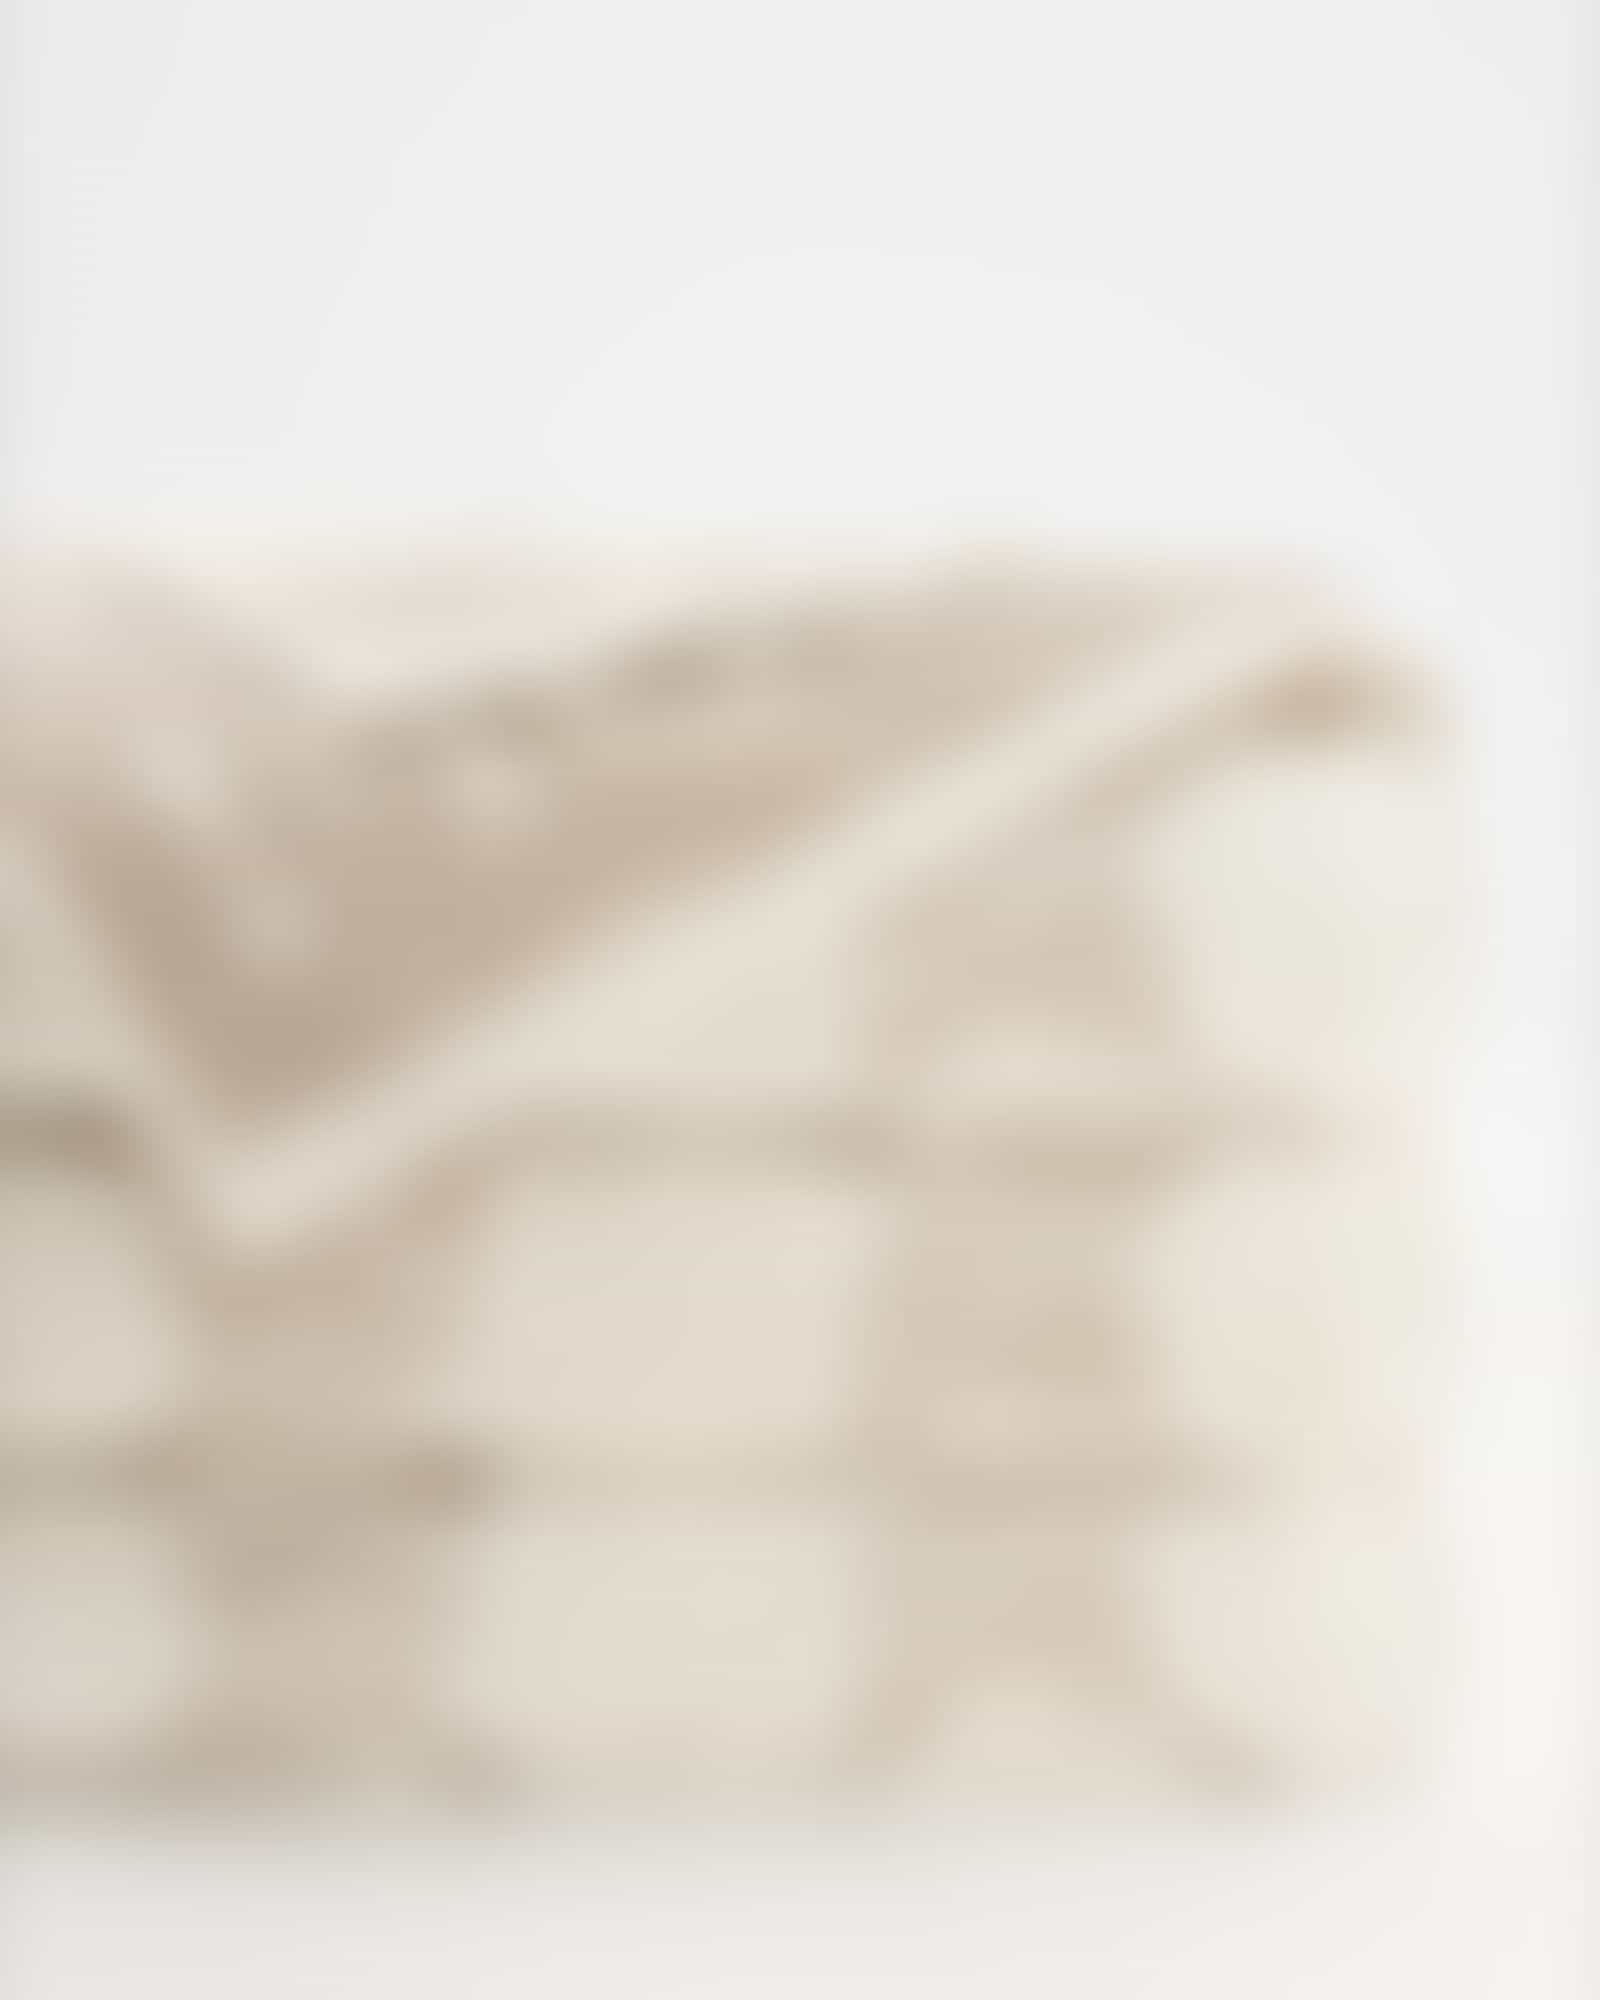 JOOP! Classic - Cornflower 1611 - Farbe: Creme - 36 - Gästetuch 30x50 cm Detailbild 2